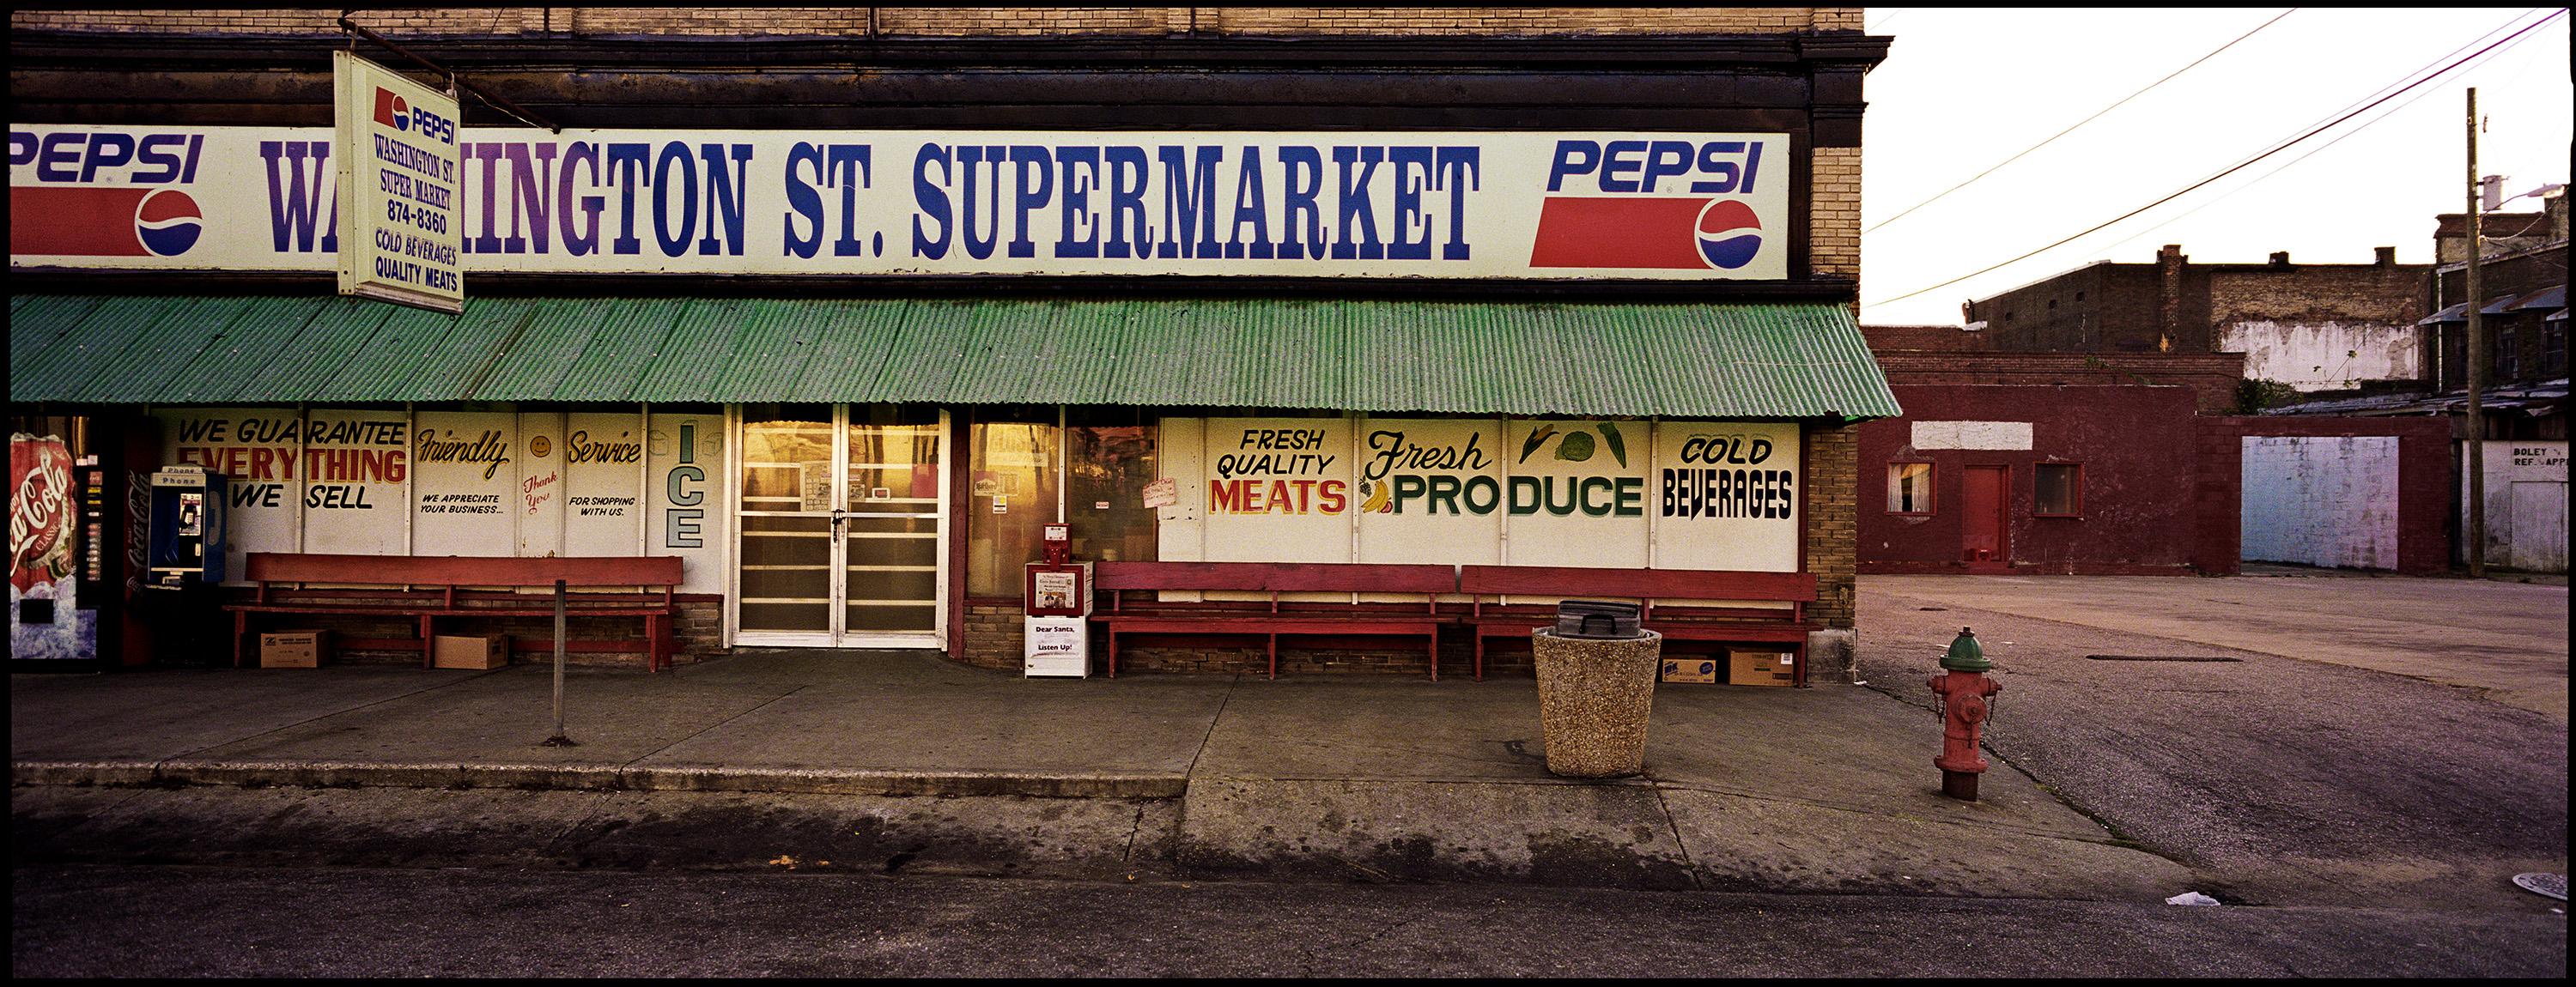 Jerry Siegel Landscape Photograph - "Washington Street Market, Selma, AL" - Southern Photography - Christenberry